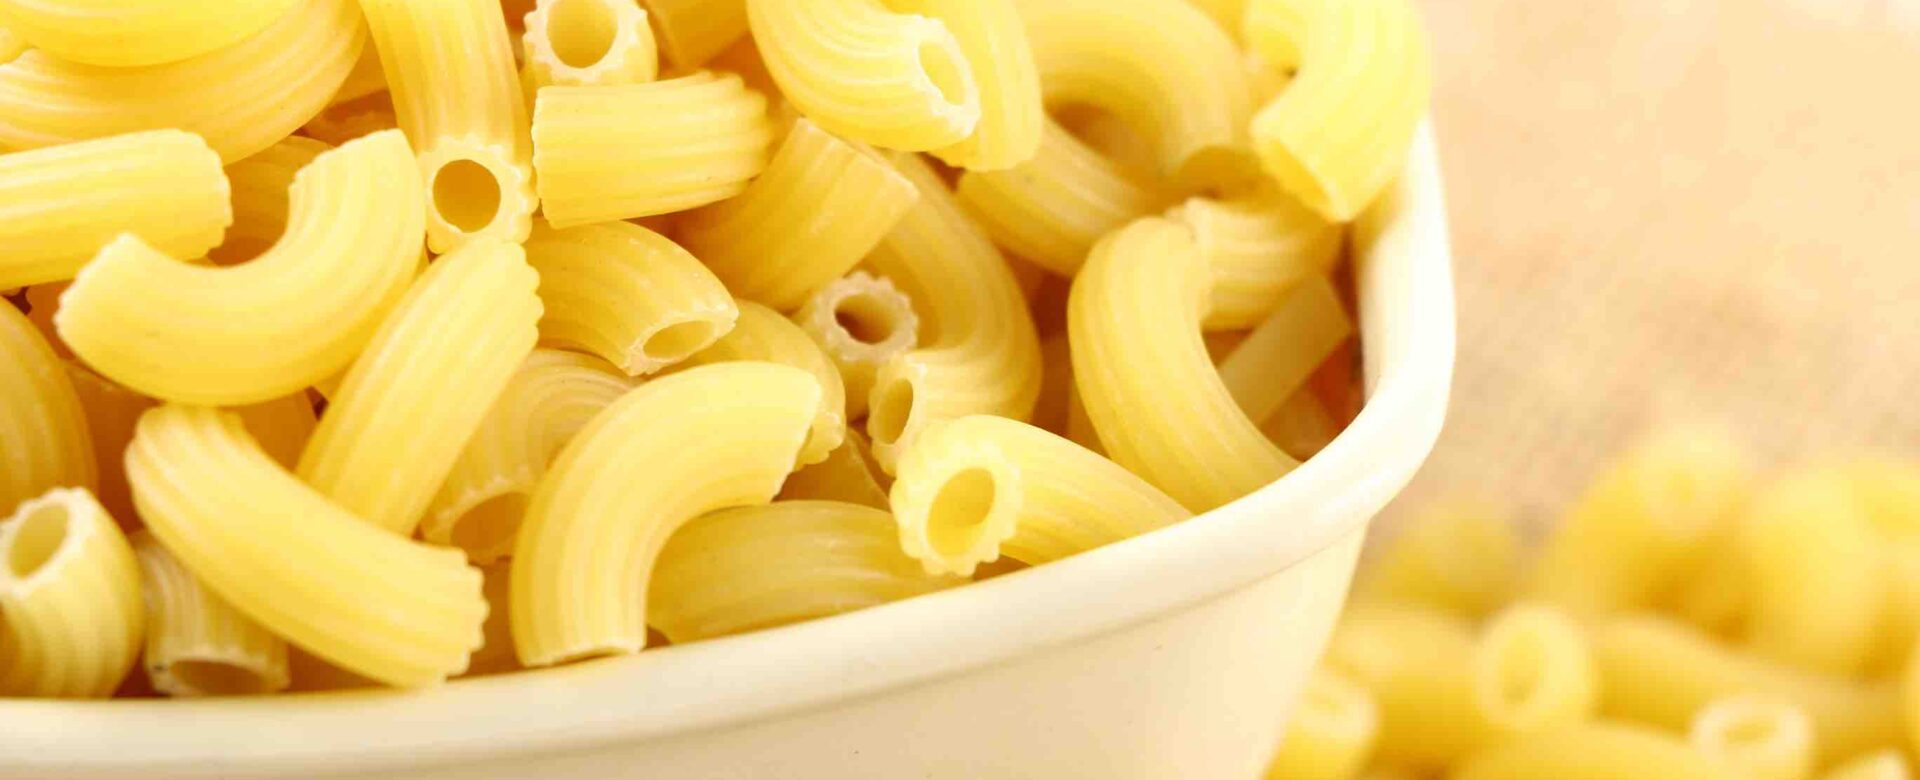 Is macaroni gezond?